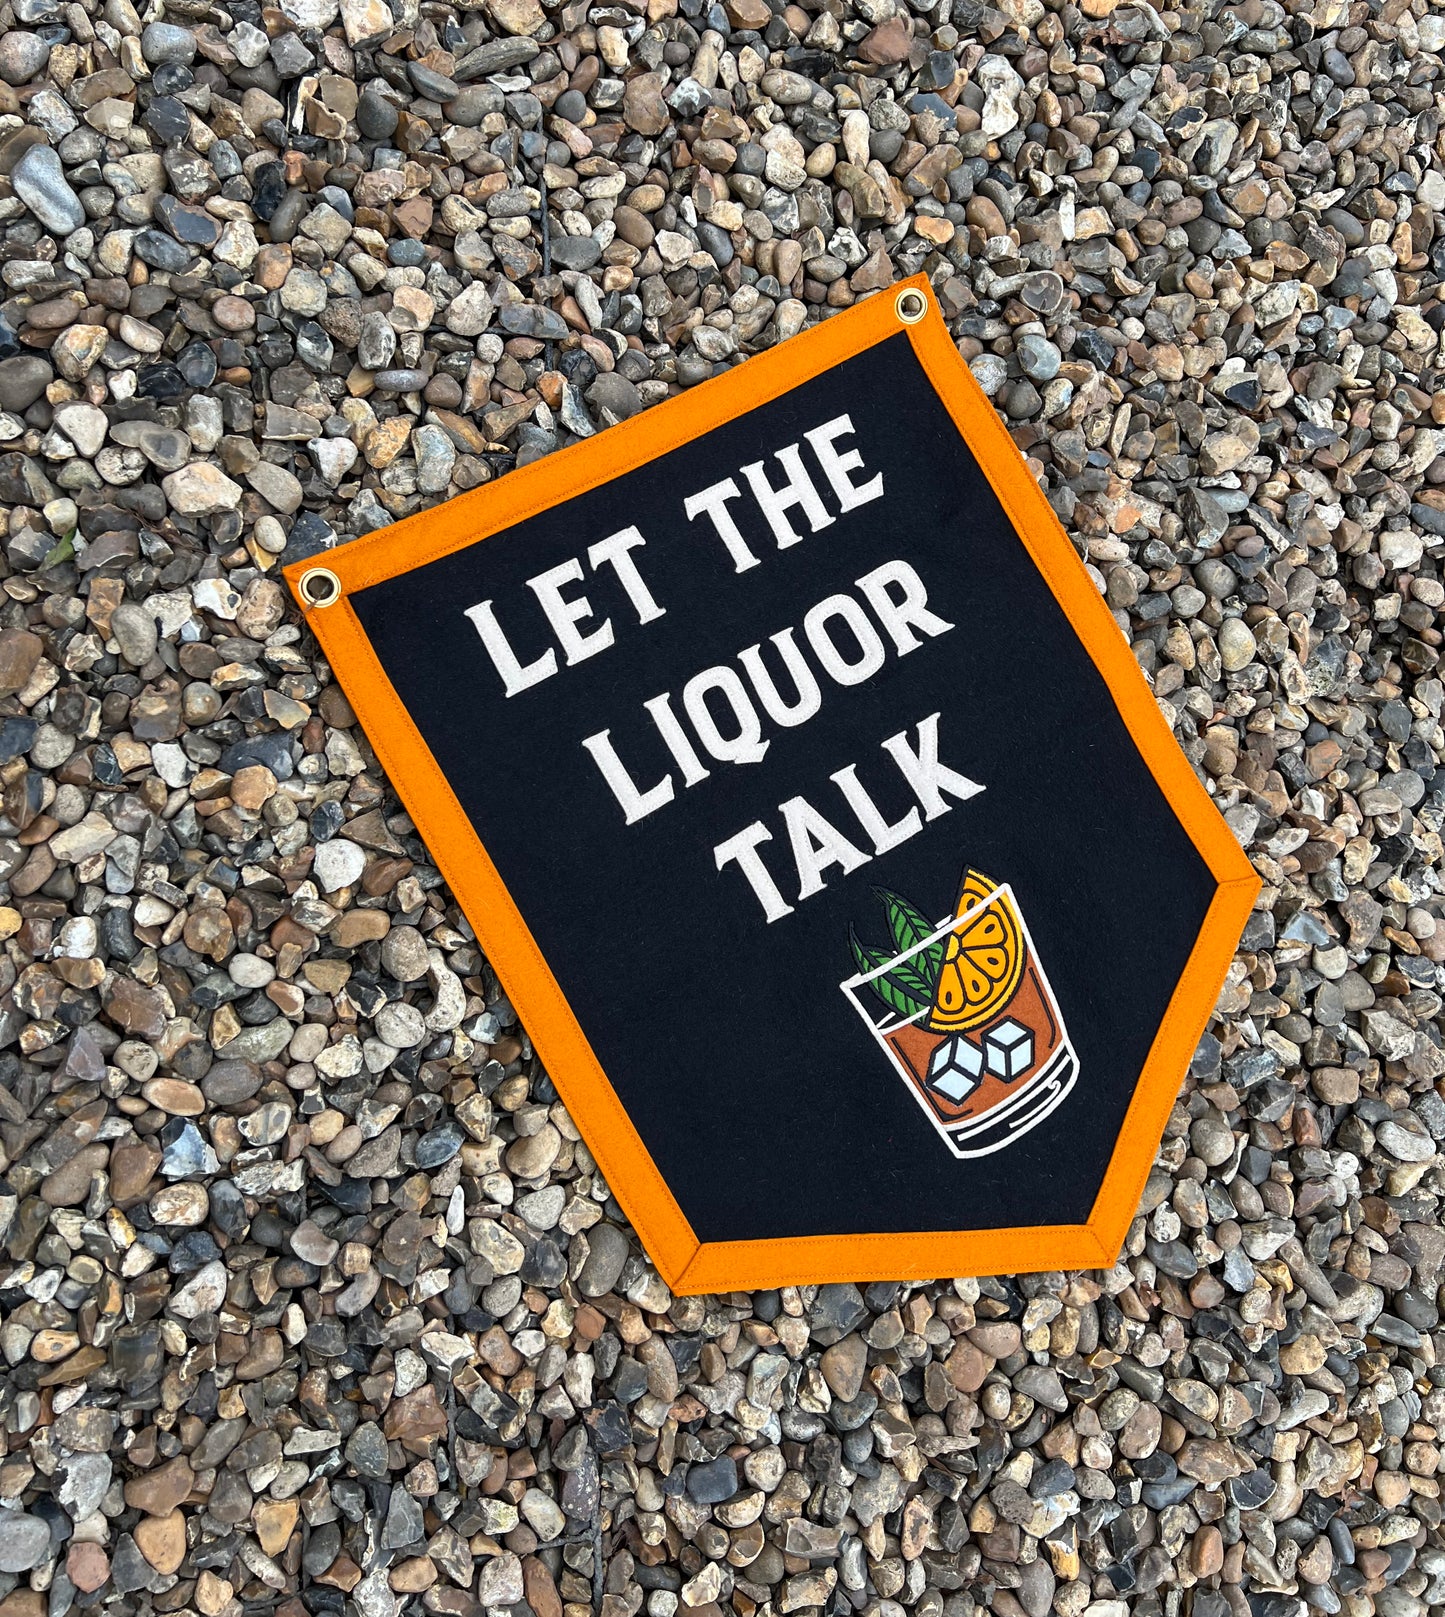 Let The Liquor Talk Banner